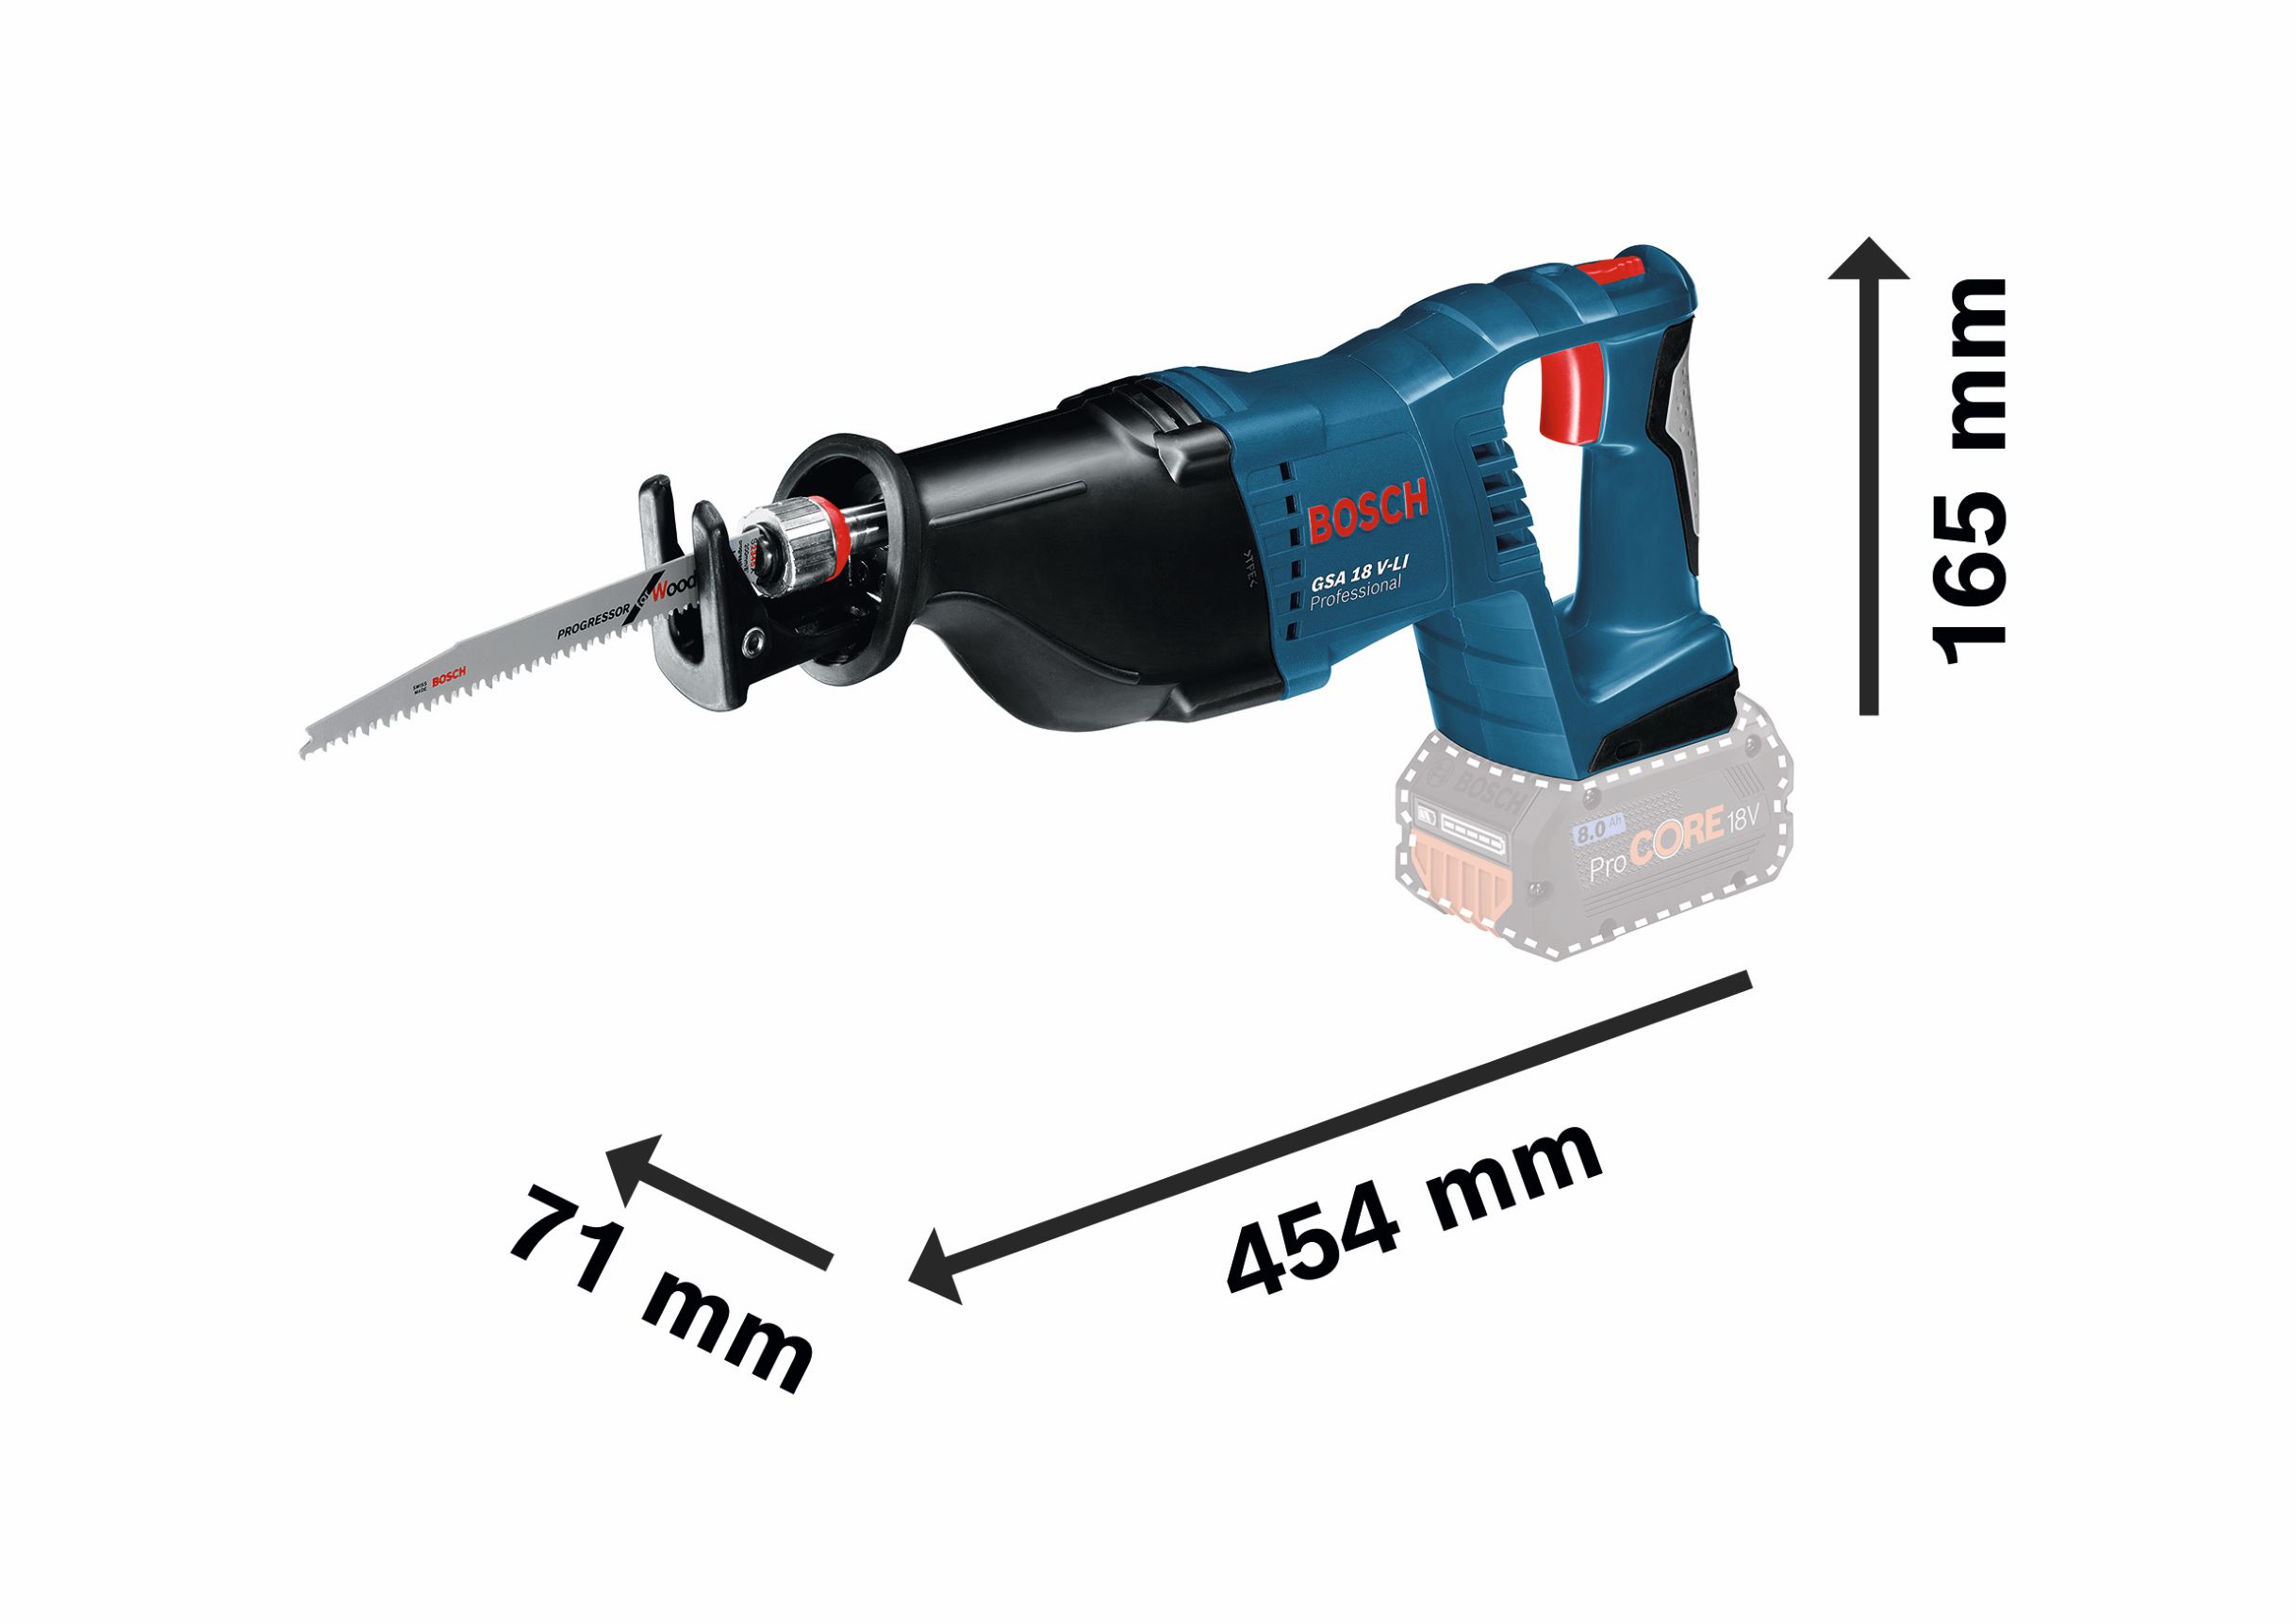 GSA 18 V-LI Cordless Reciprocating Saw in L-Boxx Bosch - 3